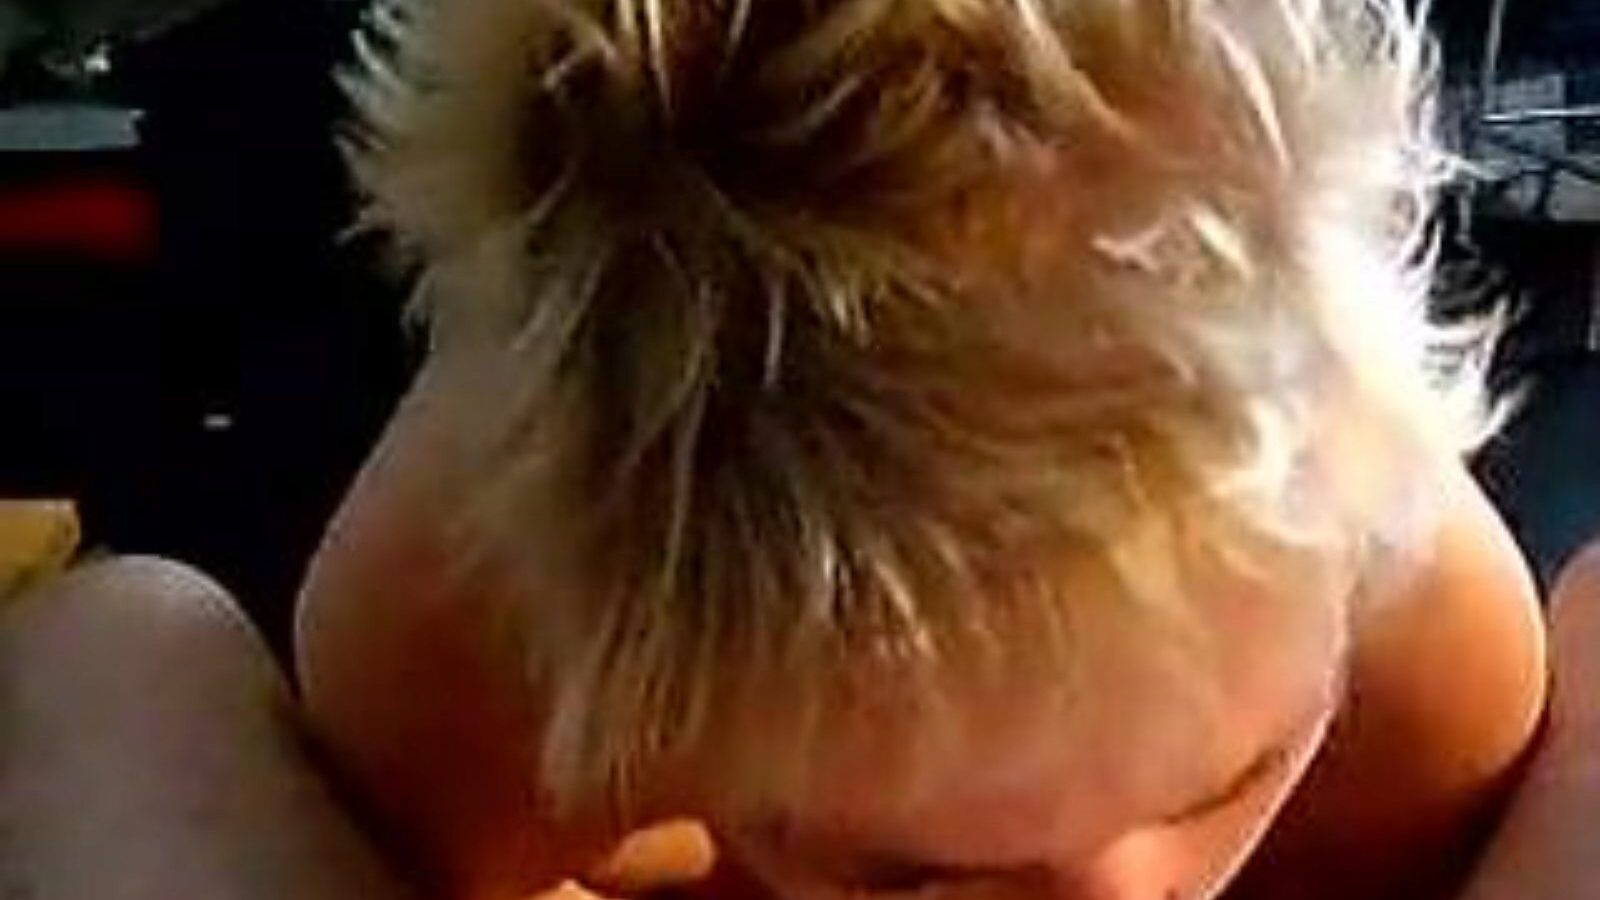 Leuke Dame: סרטון פורנו של ילדה תוצרת בית וותיקה A6 - Xhamster צפה בסרט Leuke Dame Tube Fuckfest בחינם על Xhamster, עם האוסף הכי חם של ילדות תוצרת בית הולנדית, זקנה ומוצץ קליפים פורנוגרפיים.